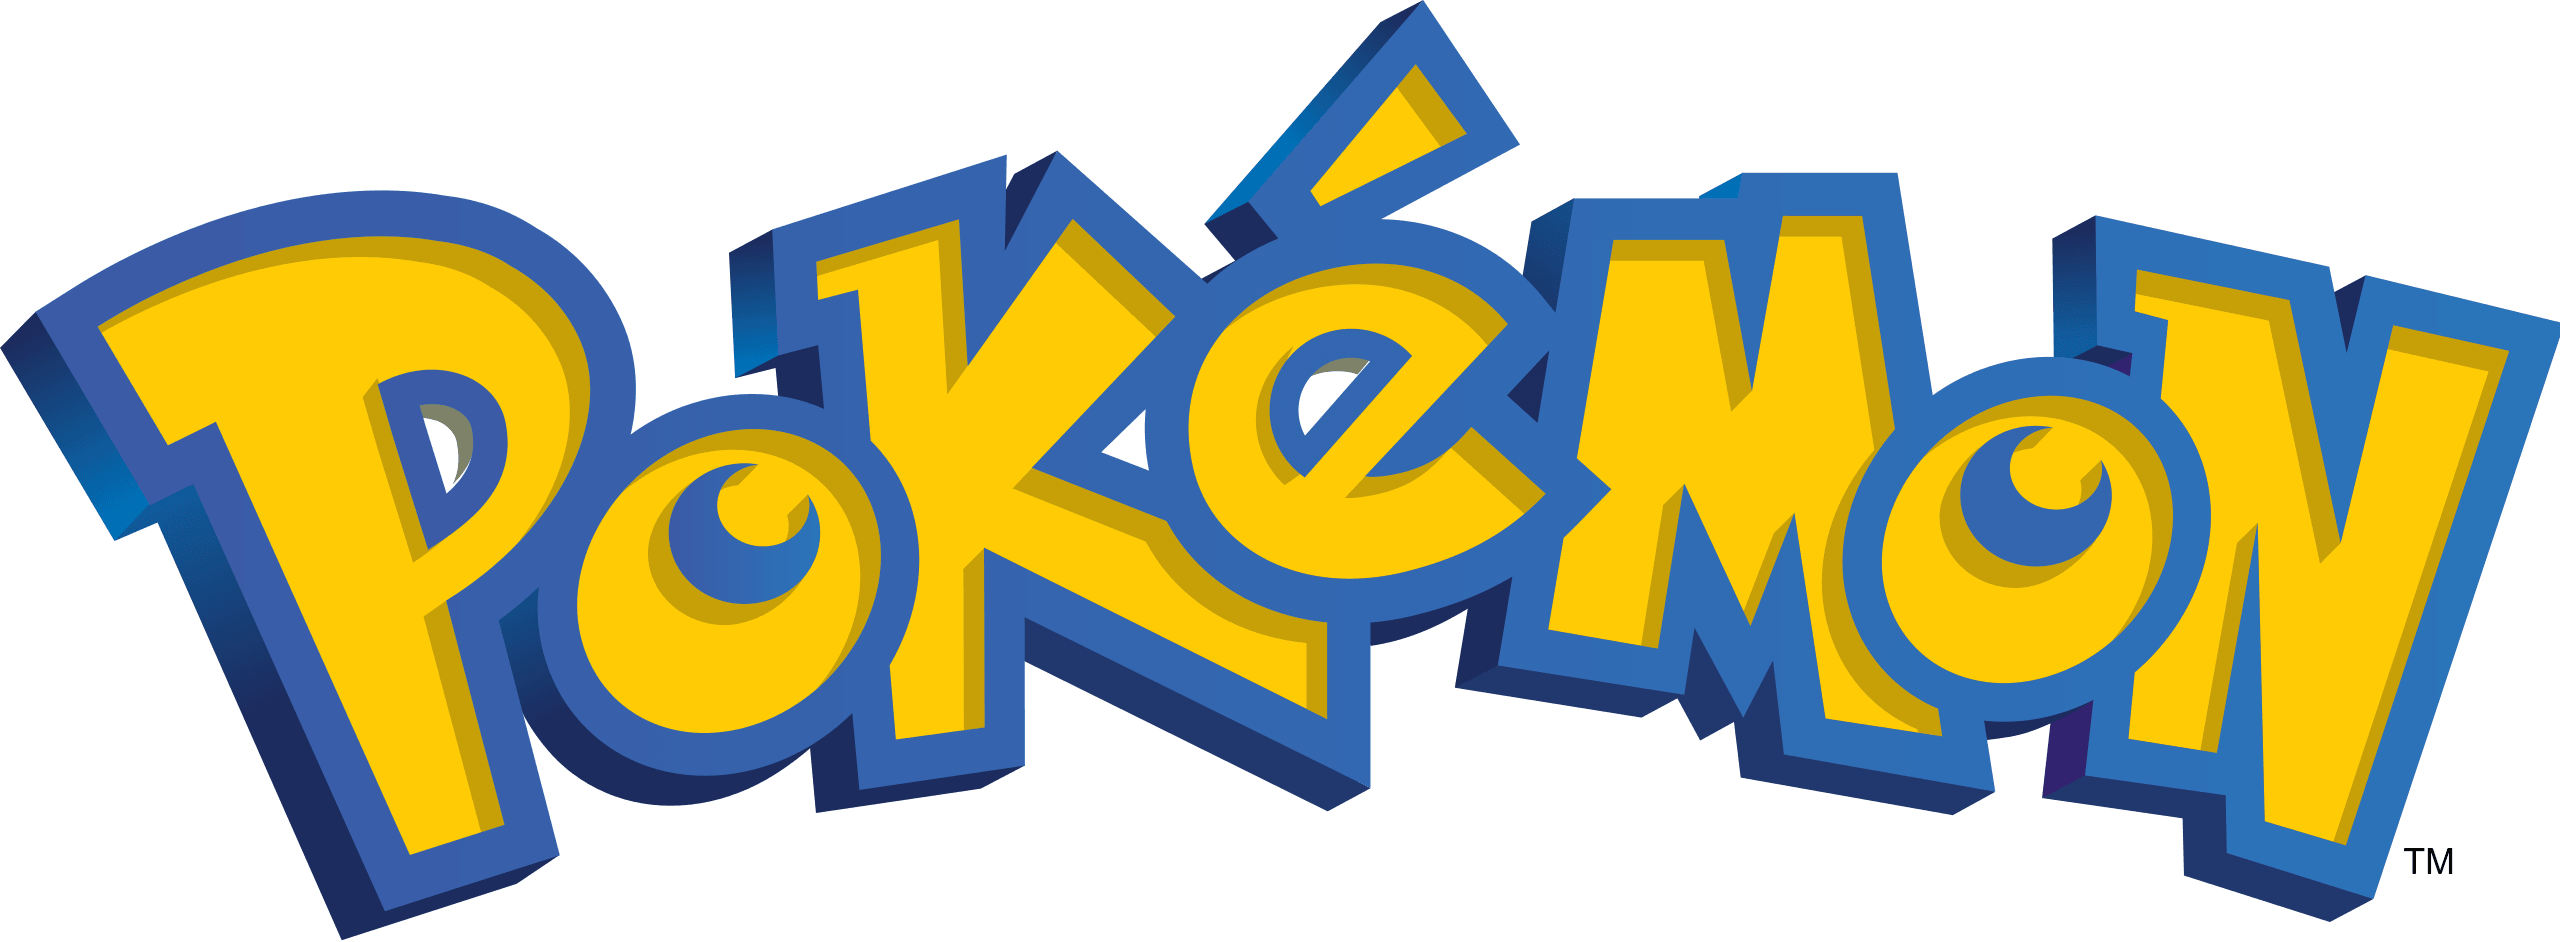 Pokemon Booster Pack (10 Cards) - Sword & Shield - Brilliant Stars - Hobby Champion Inc